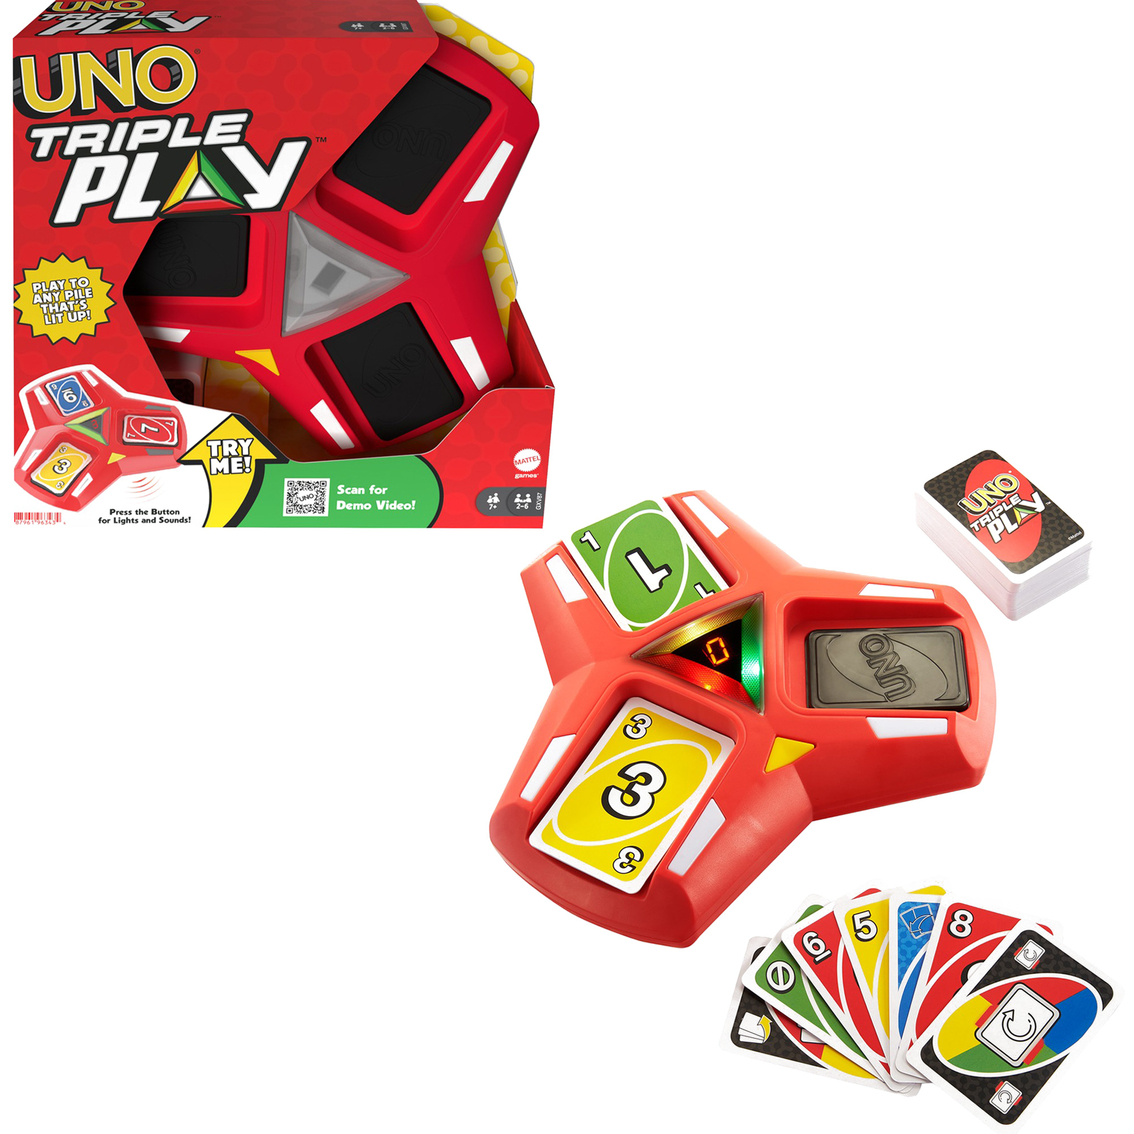 Mattel UNO Triple Play Game - Image 2 of 3